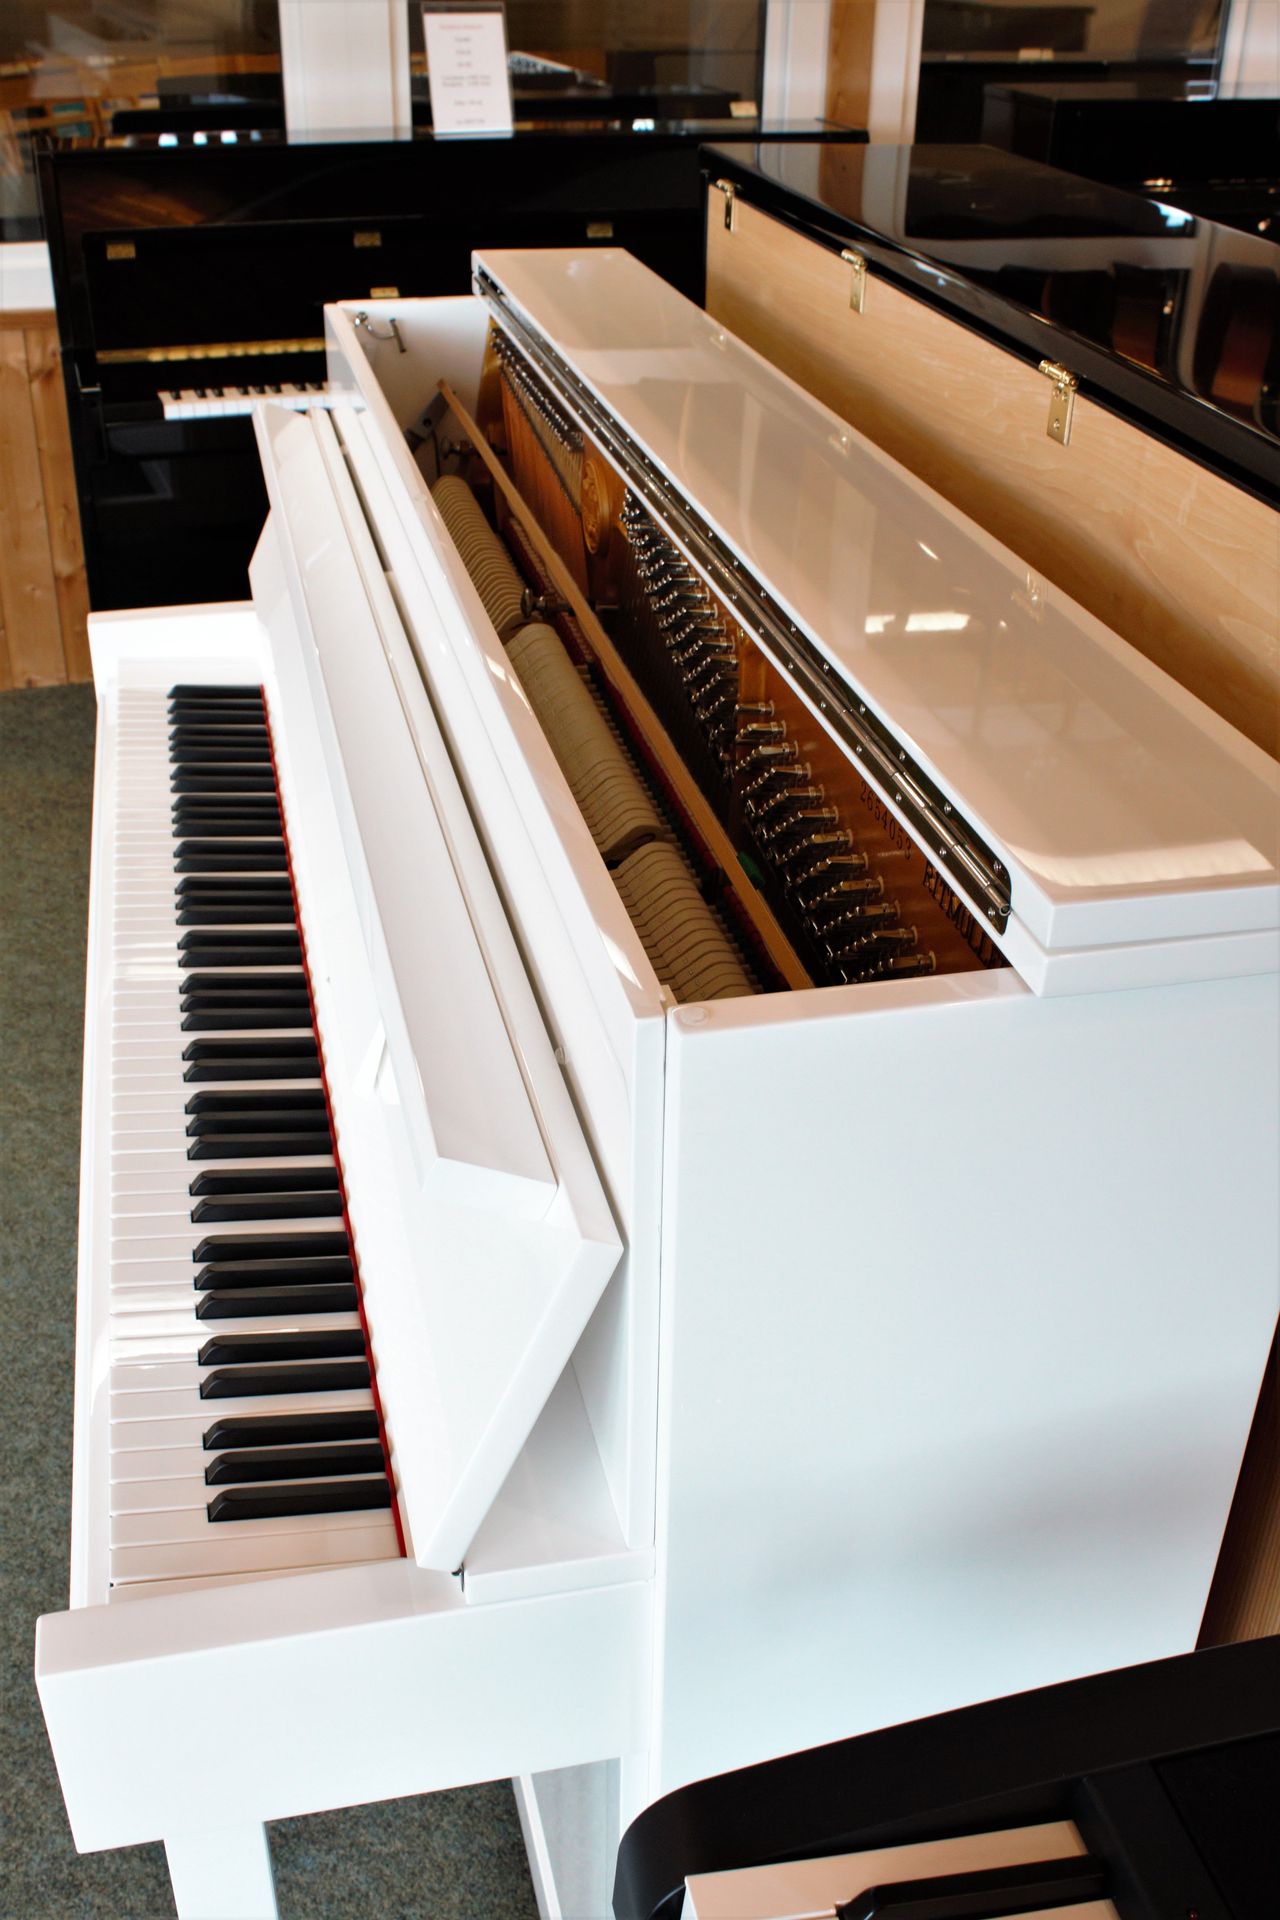 Klavier Ritmüller 110 cm weiß poliert